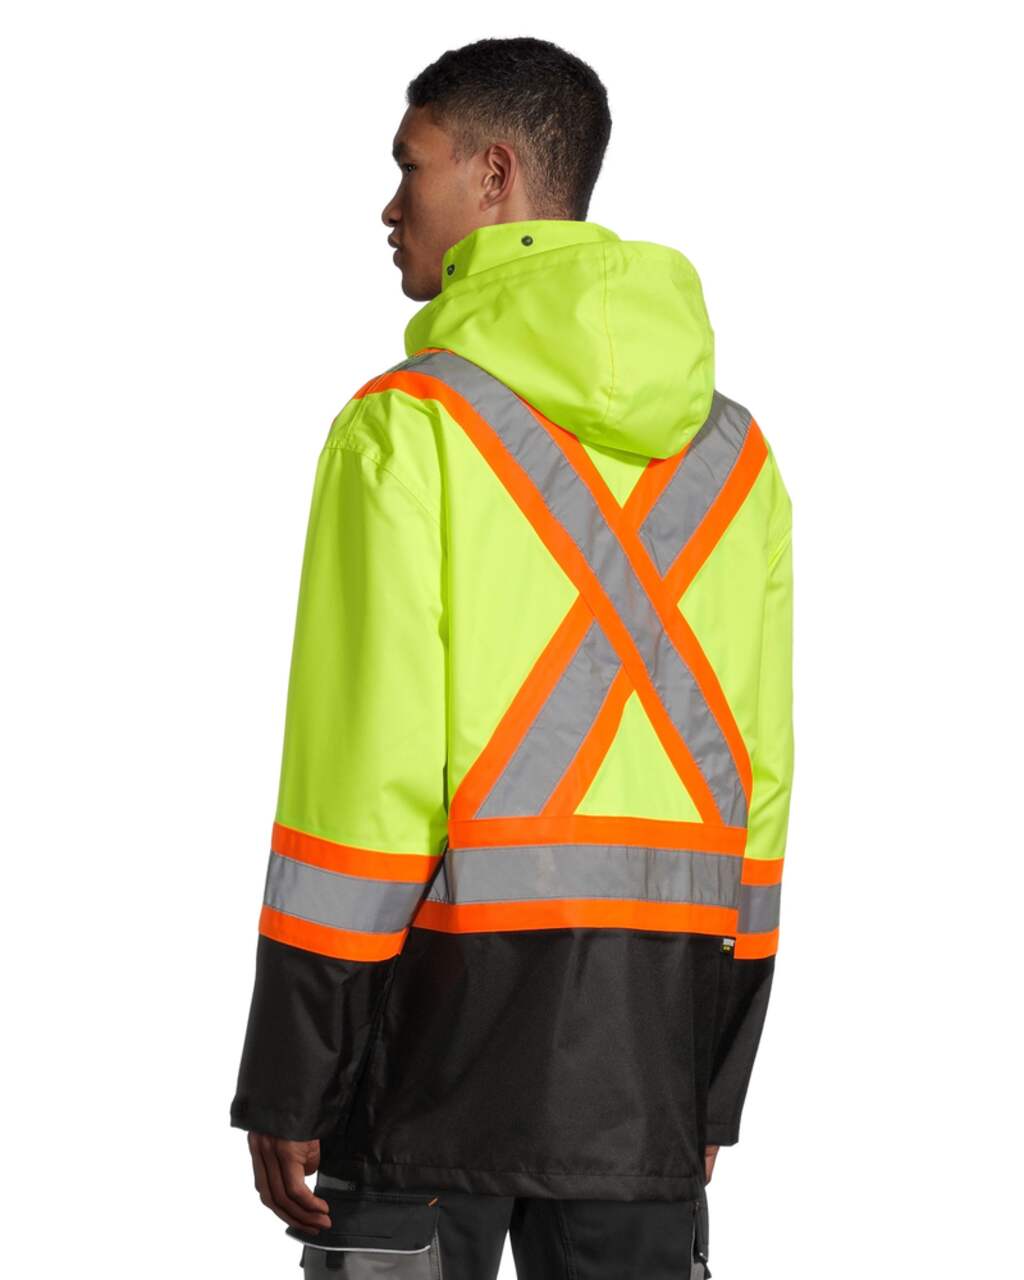 How to Make a Hooded Tyvek Rain Jacket – Gossamer Gear